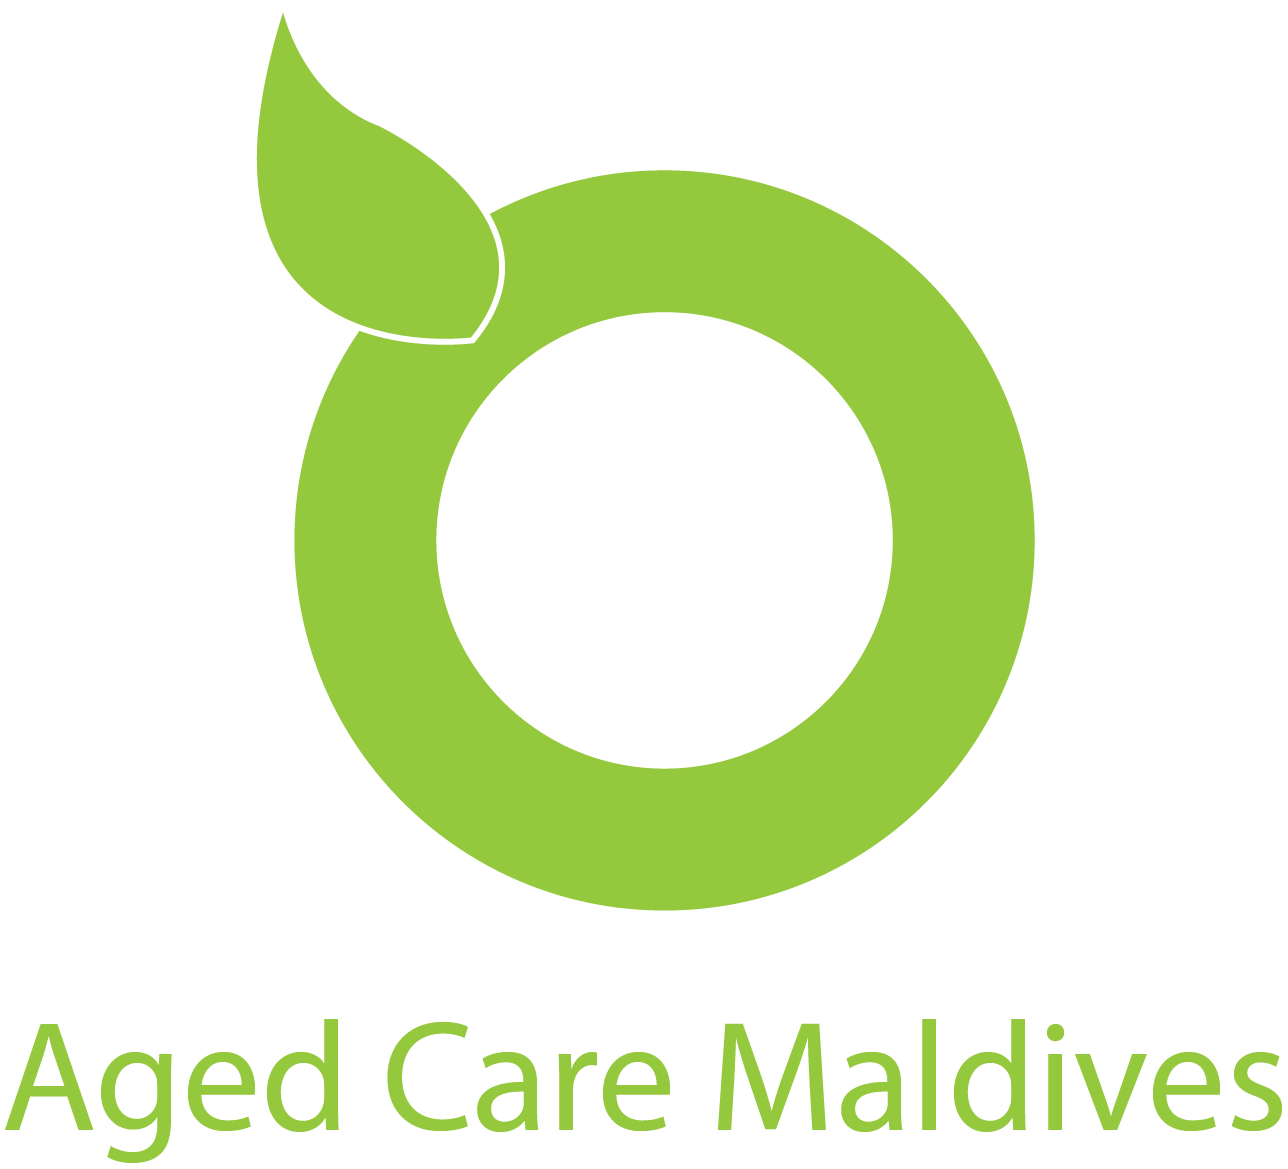 Aged Care Maldives